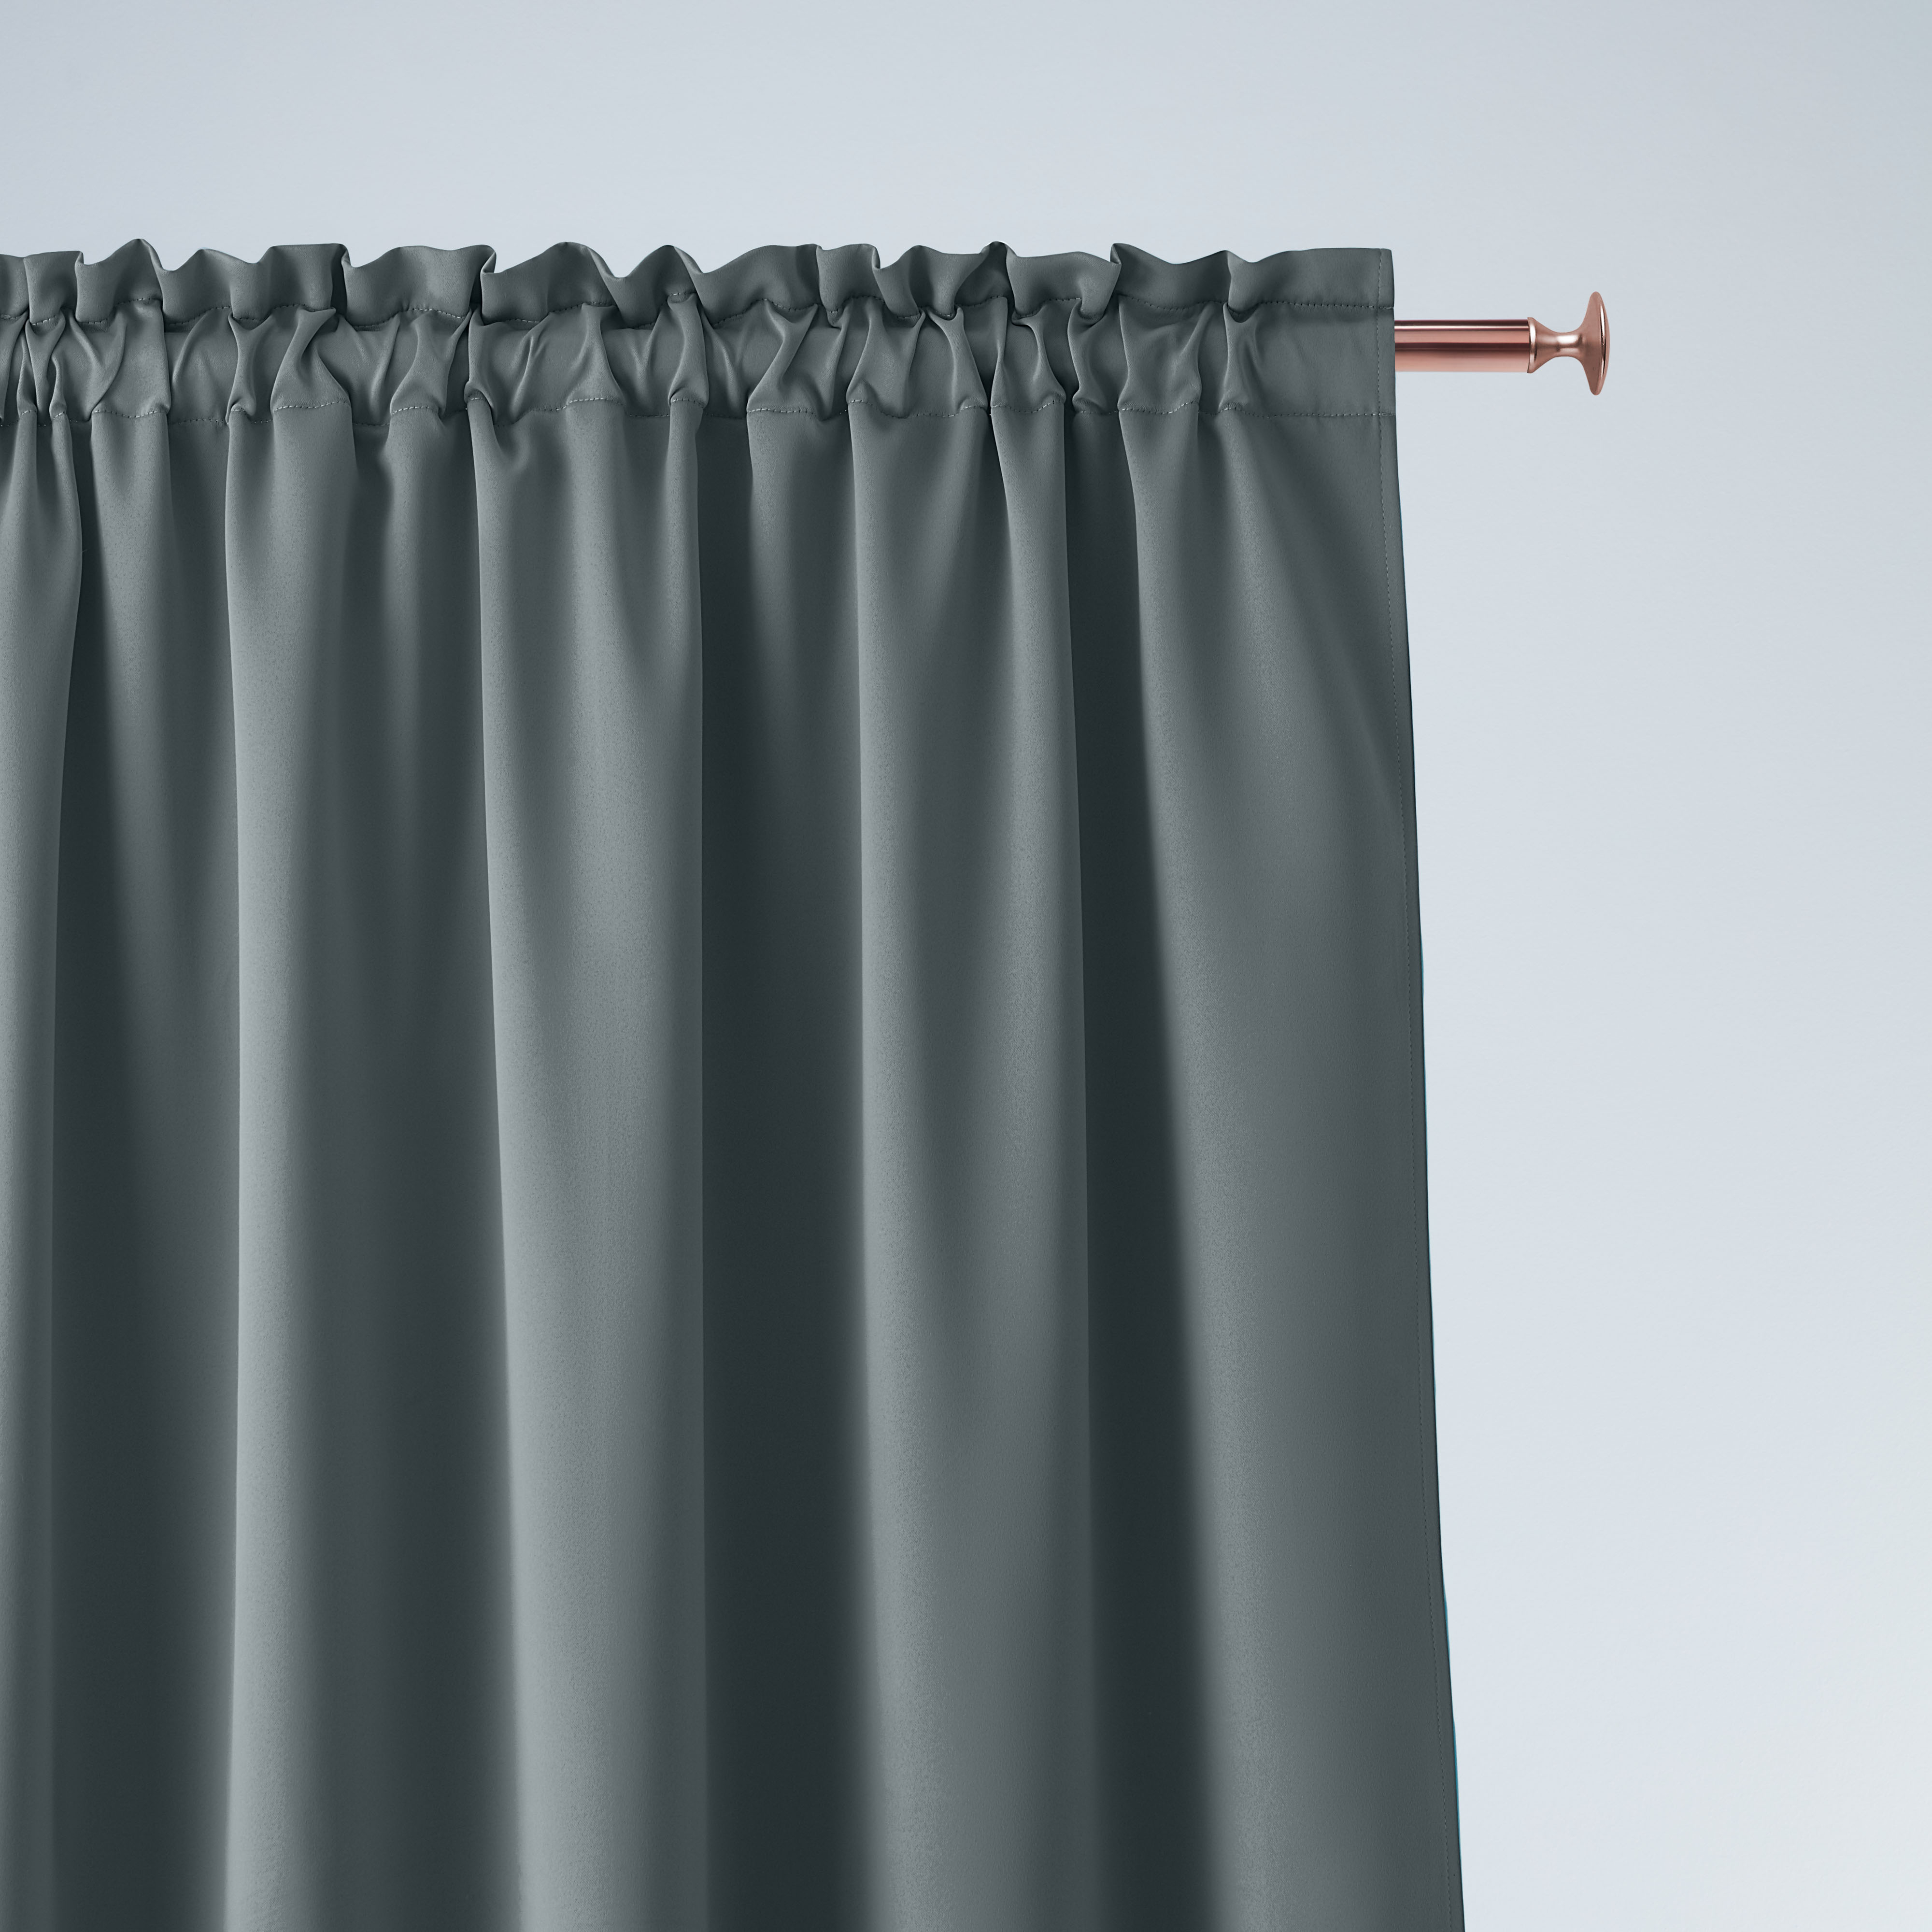 Decorative curtain in dark grey color 140 x 250 cm